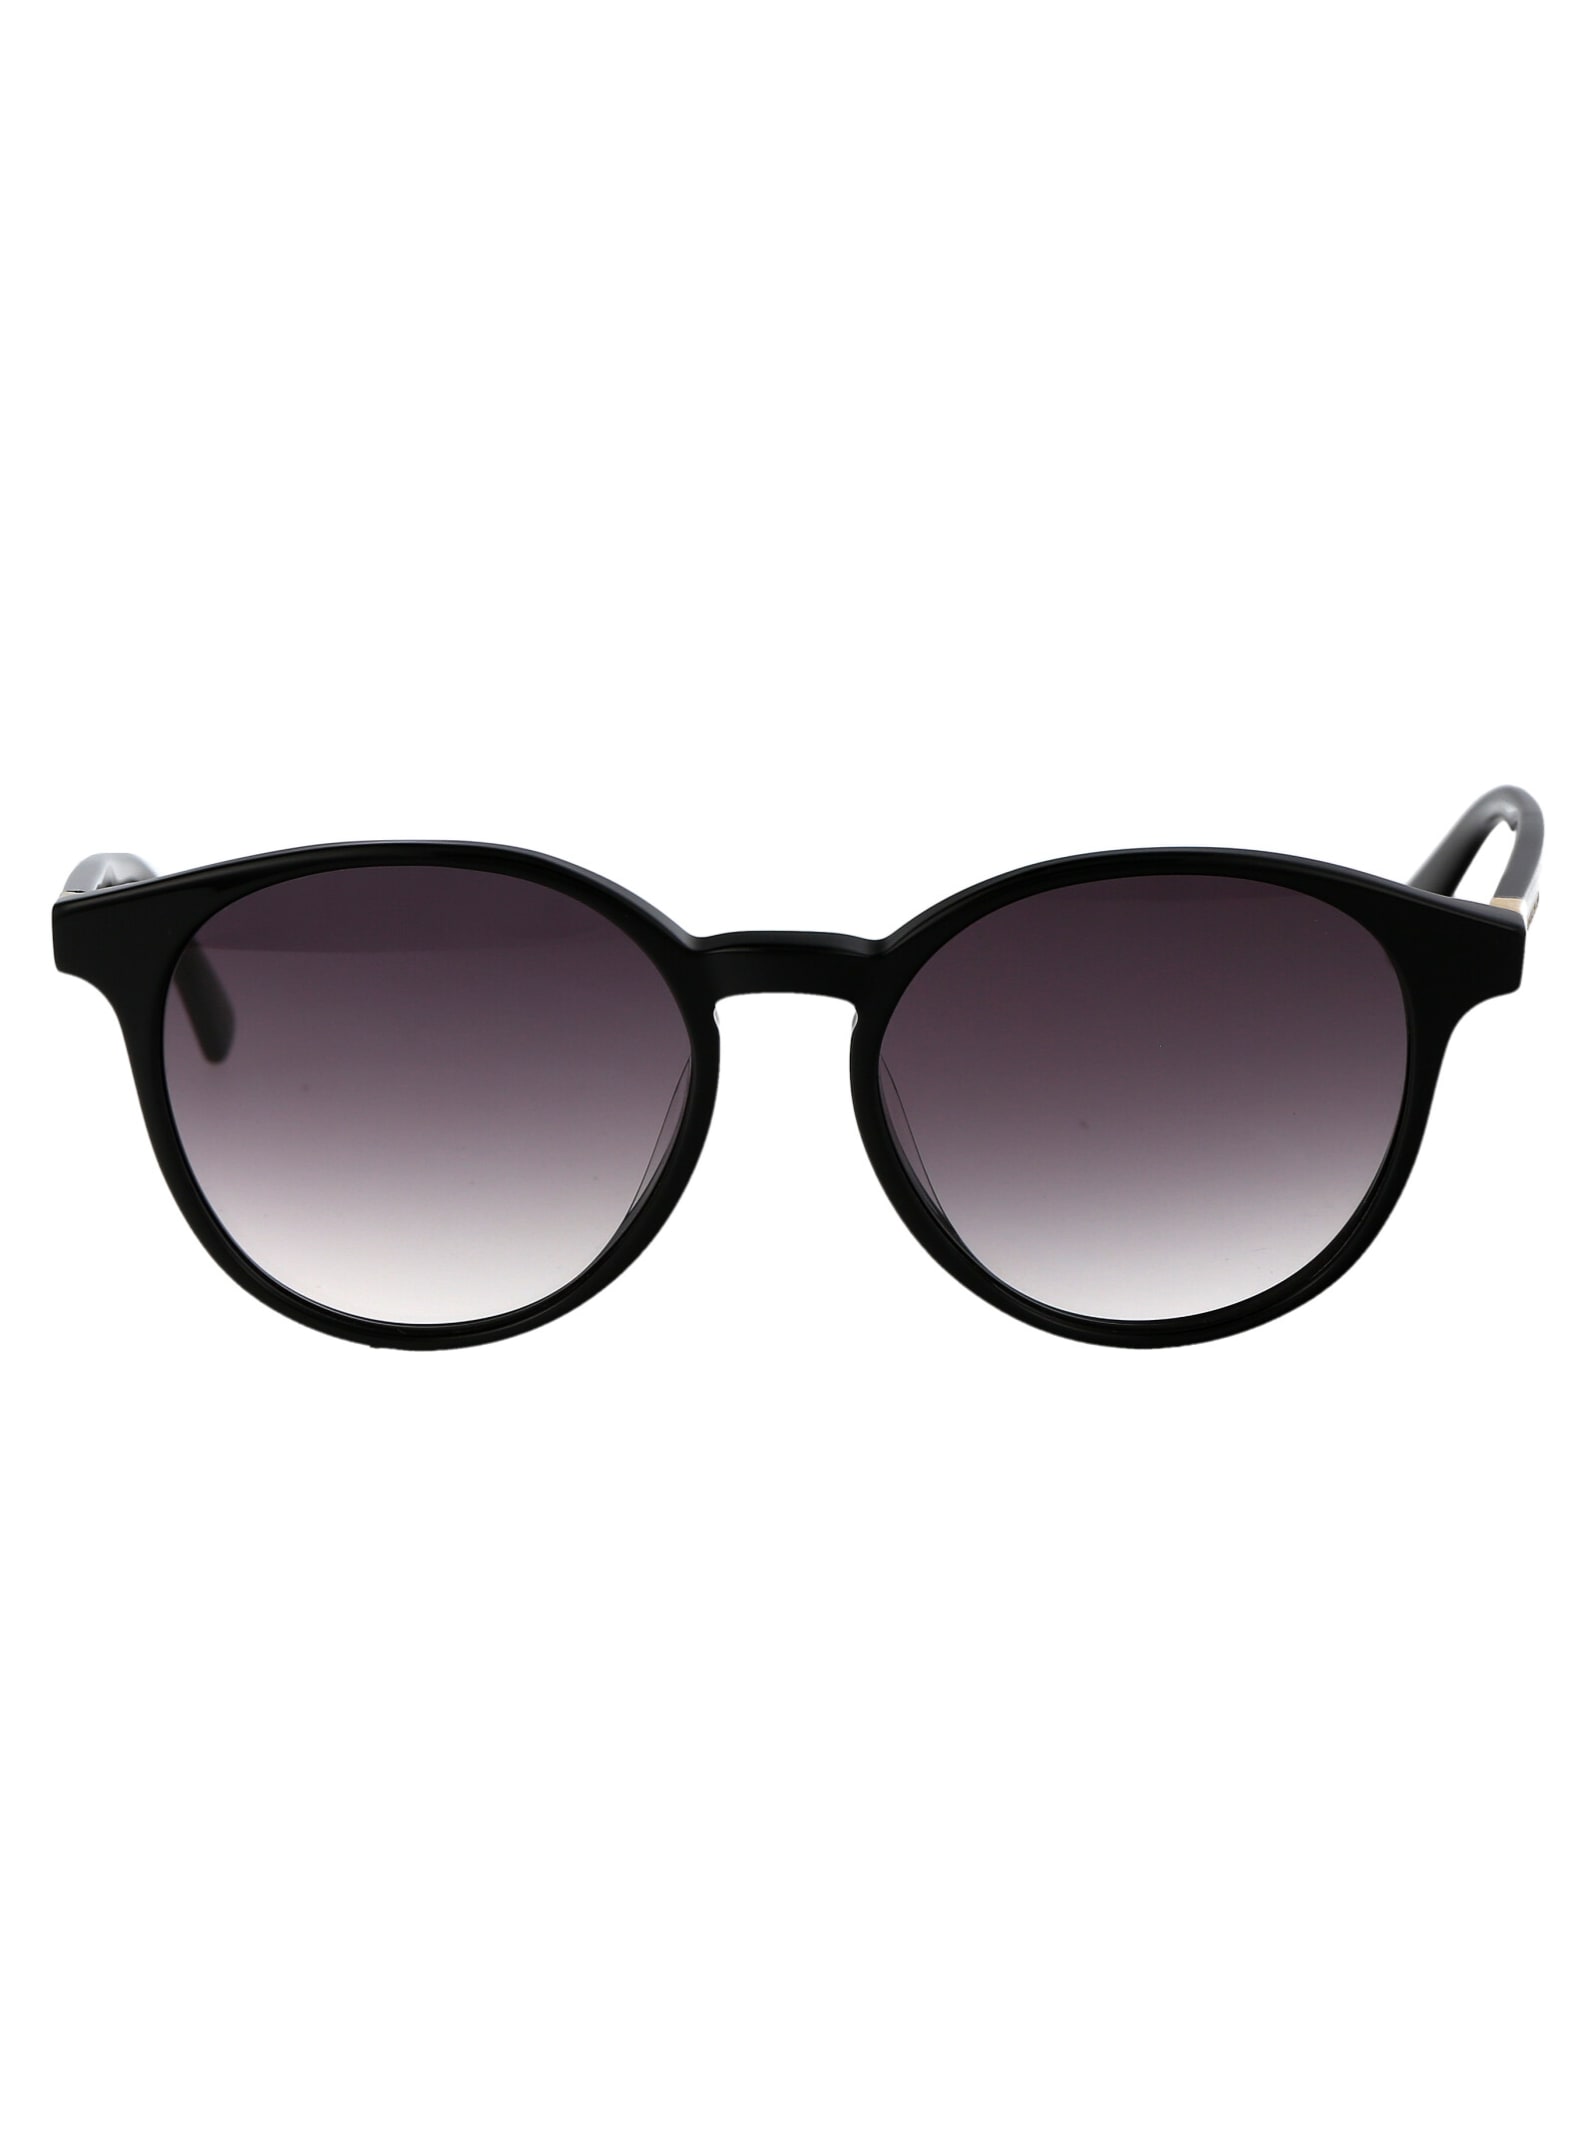 Longchamp Lo658s Sunglasses